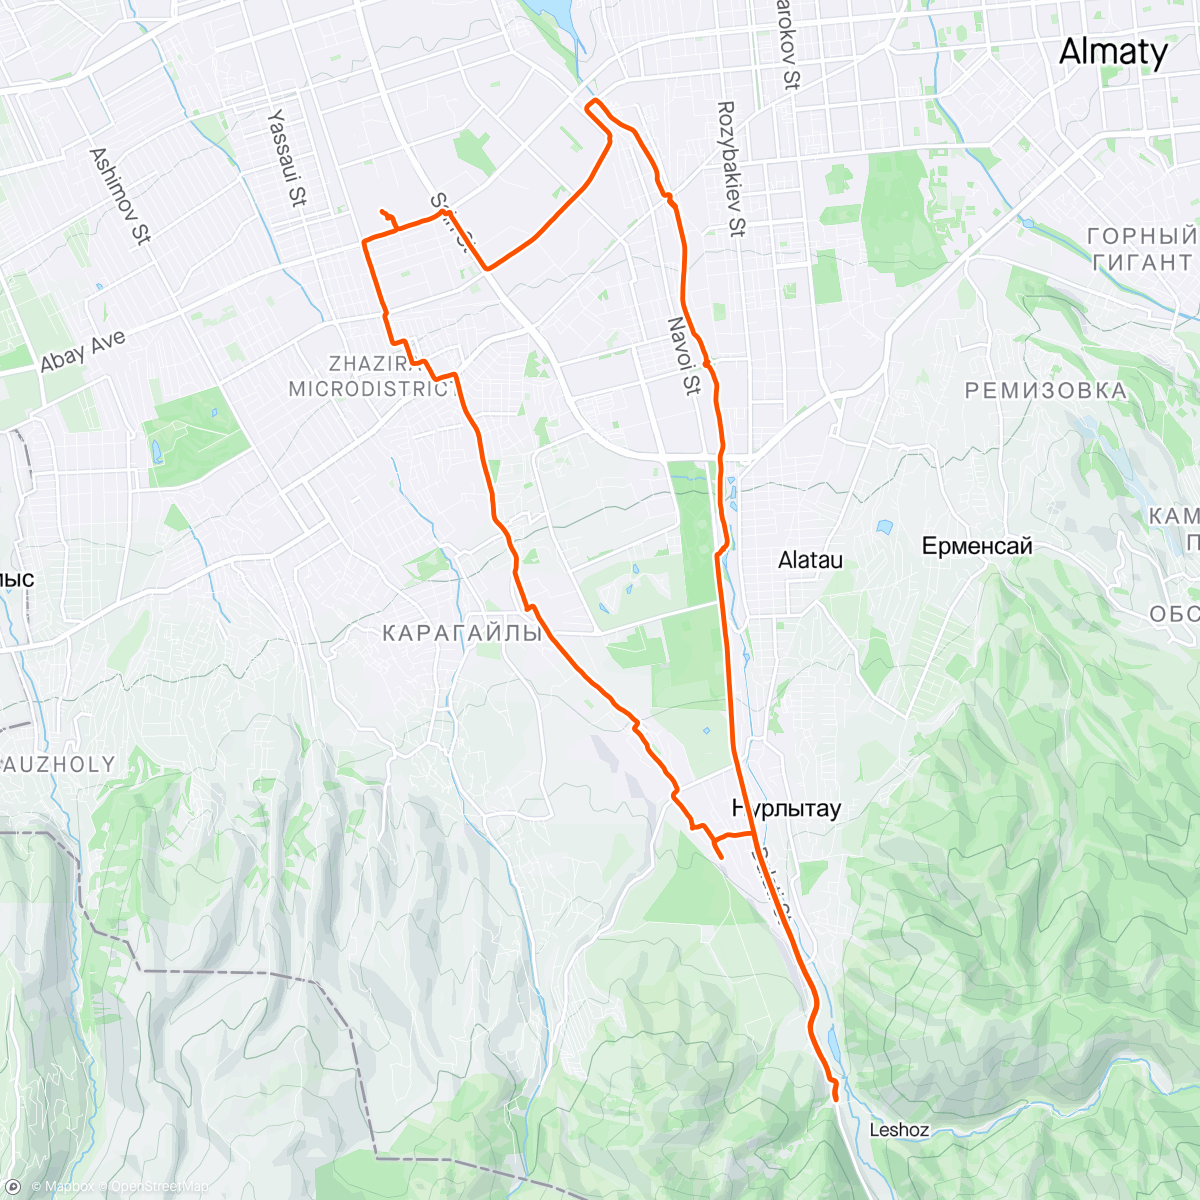 「Morning Ride」活動的地圖